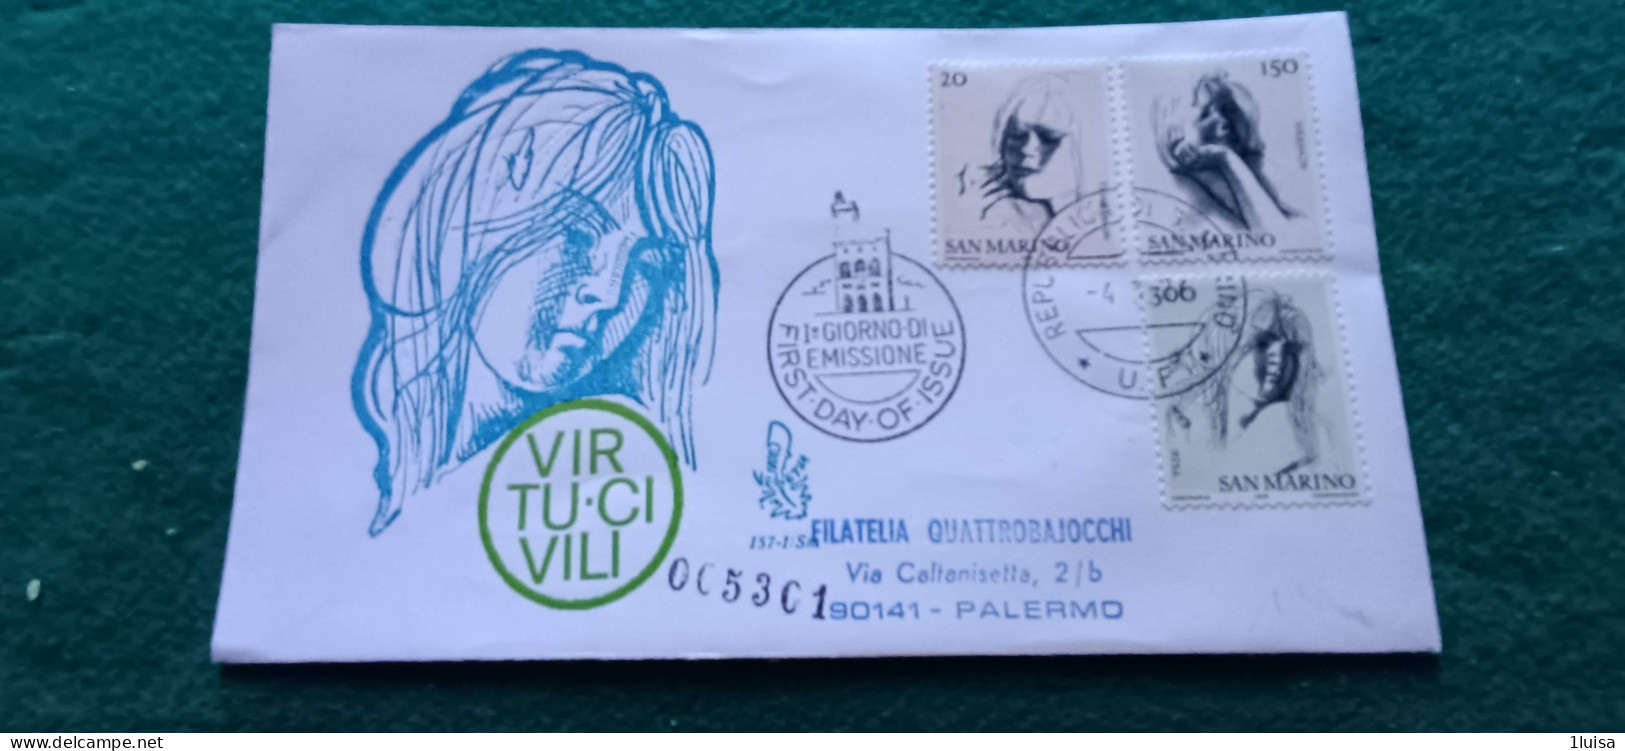 SAN MARINO 4/3/76 Virtù Civili - Express Letter Stamps